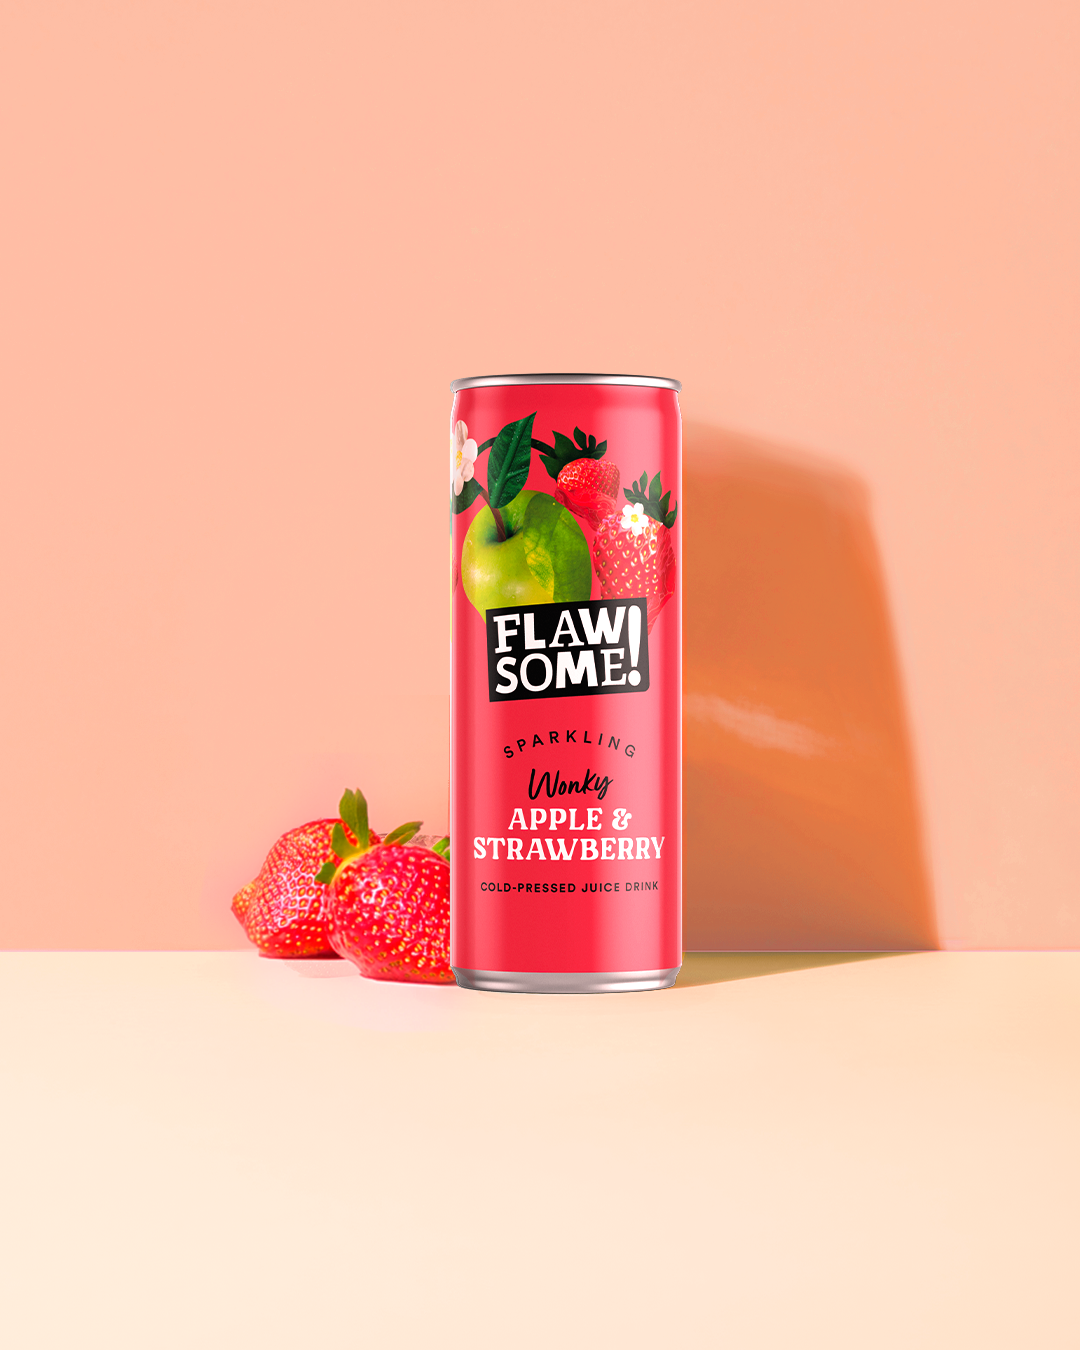 Apple & Strawberry Lightly Sparkling Juice Drink